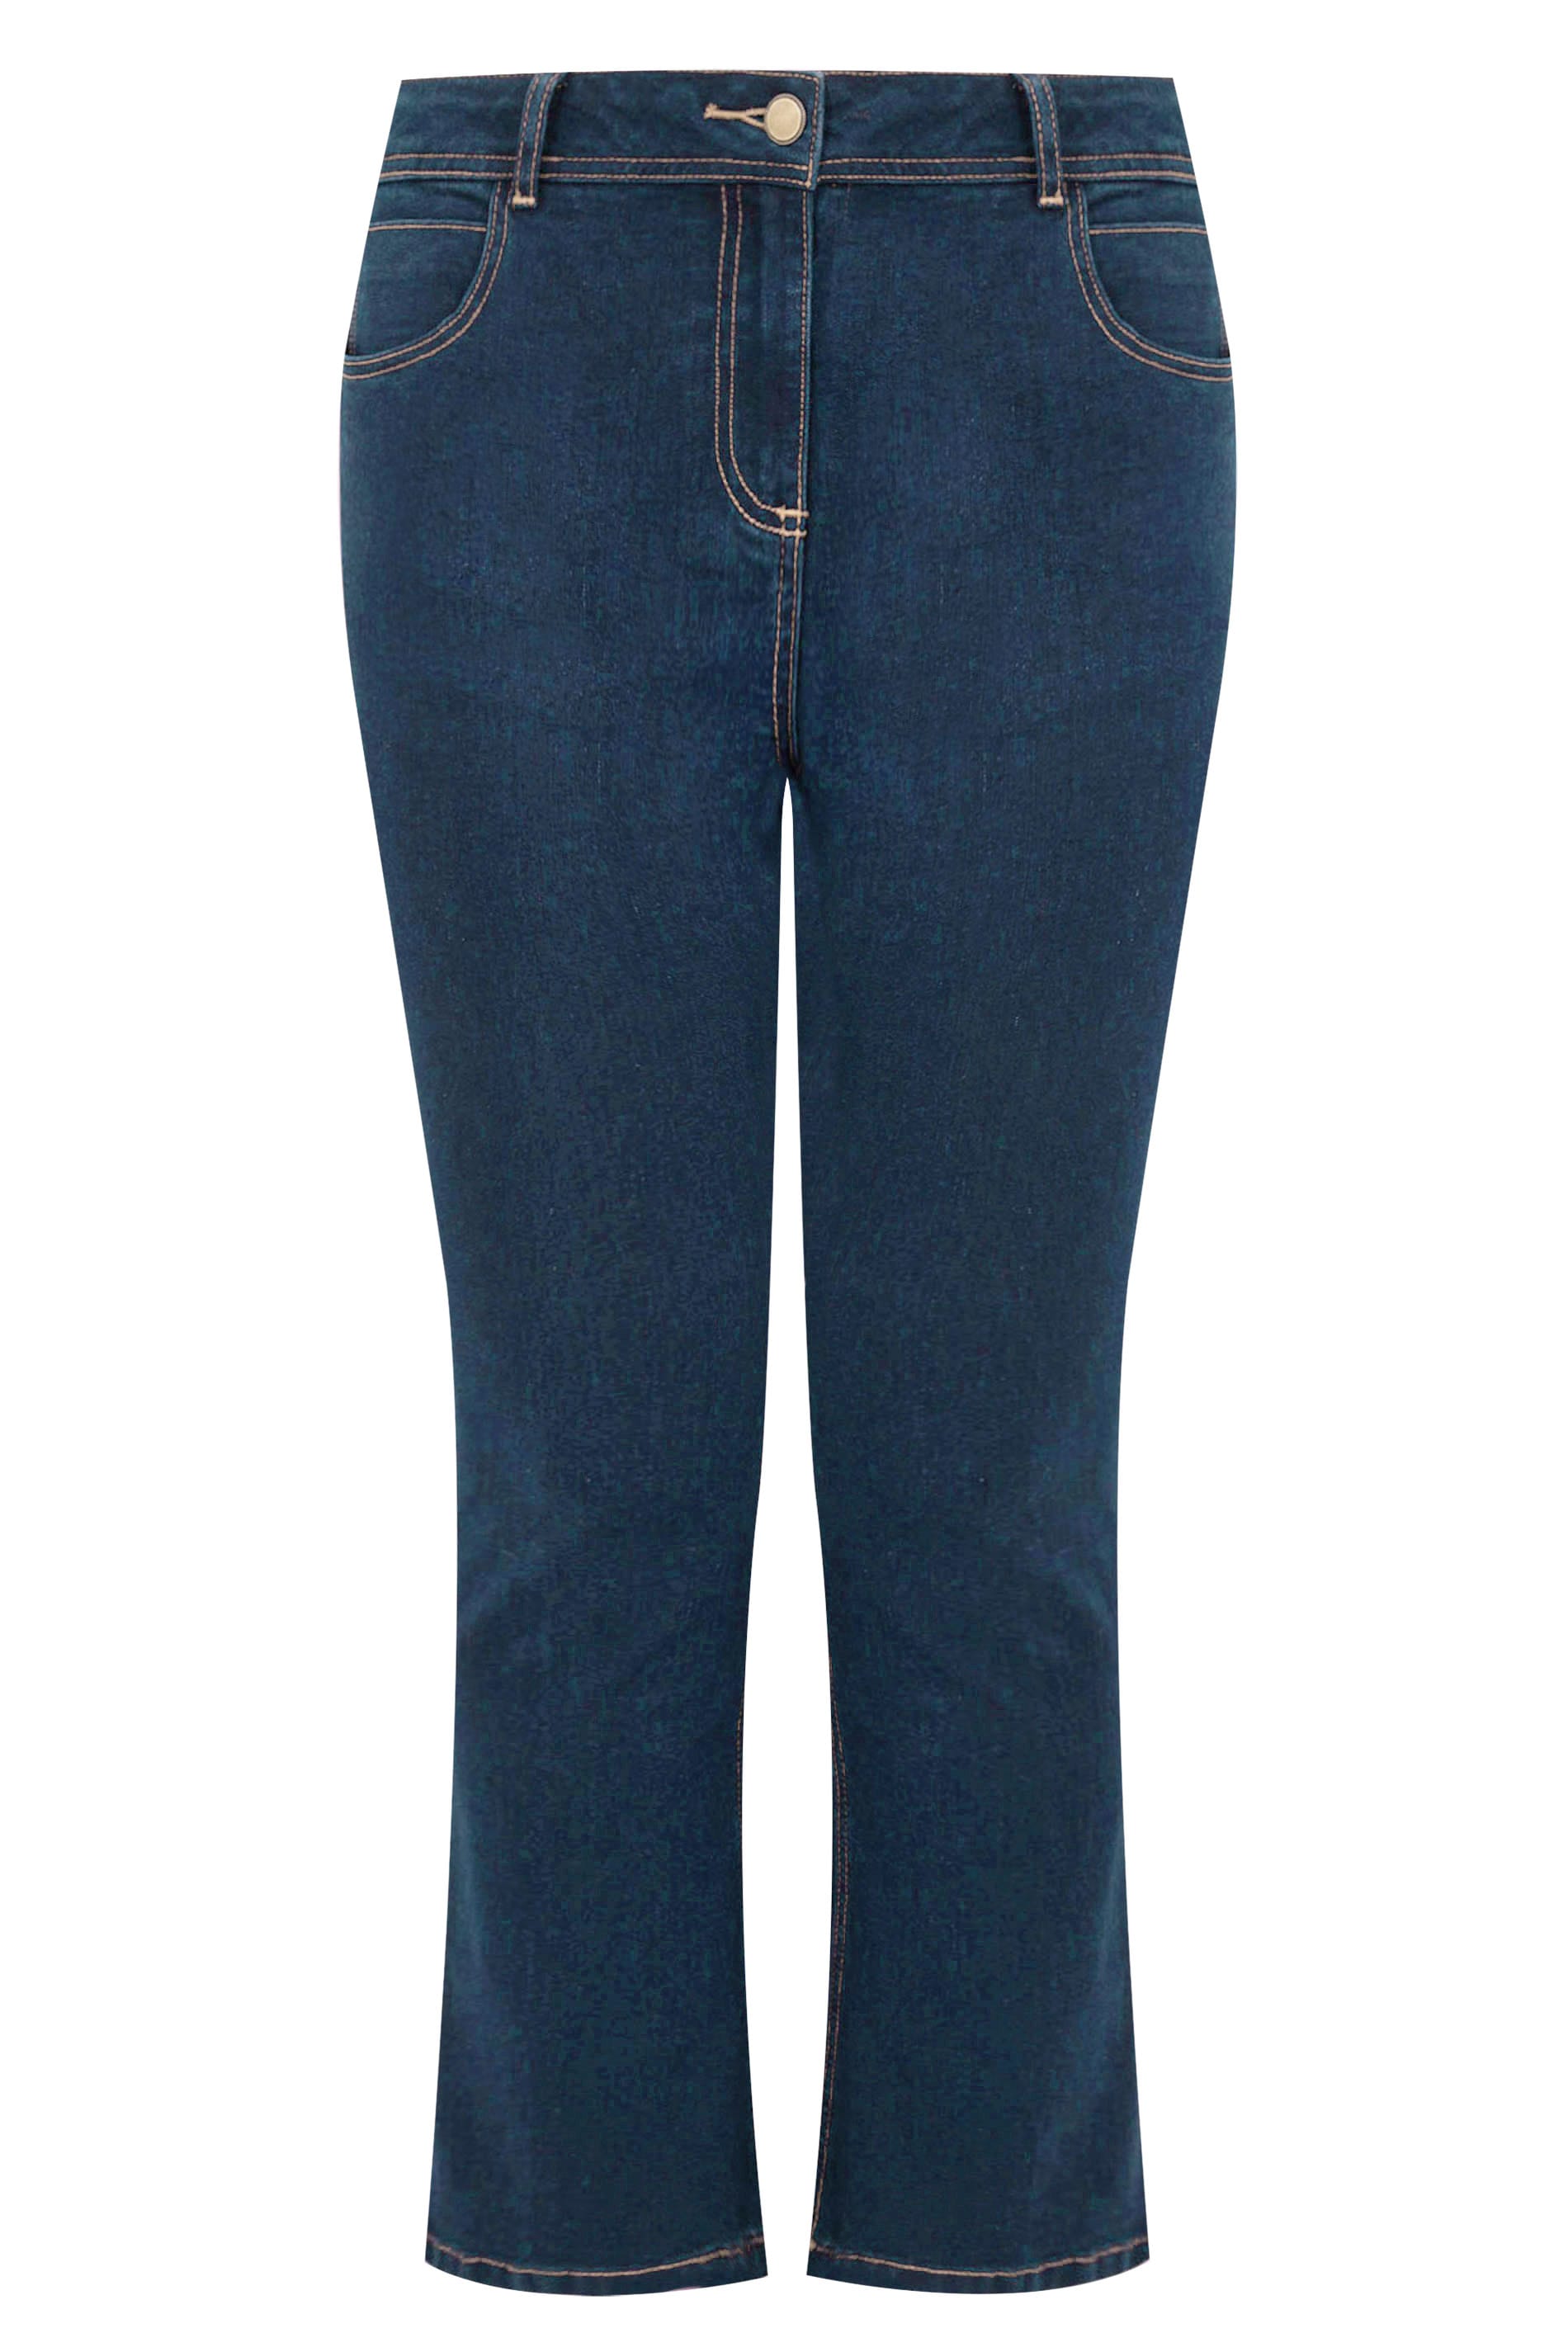 Indigo Bootcut 5 Pocket Denim Jeans Plus Size 16 to 32 